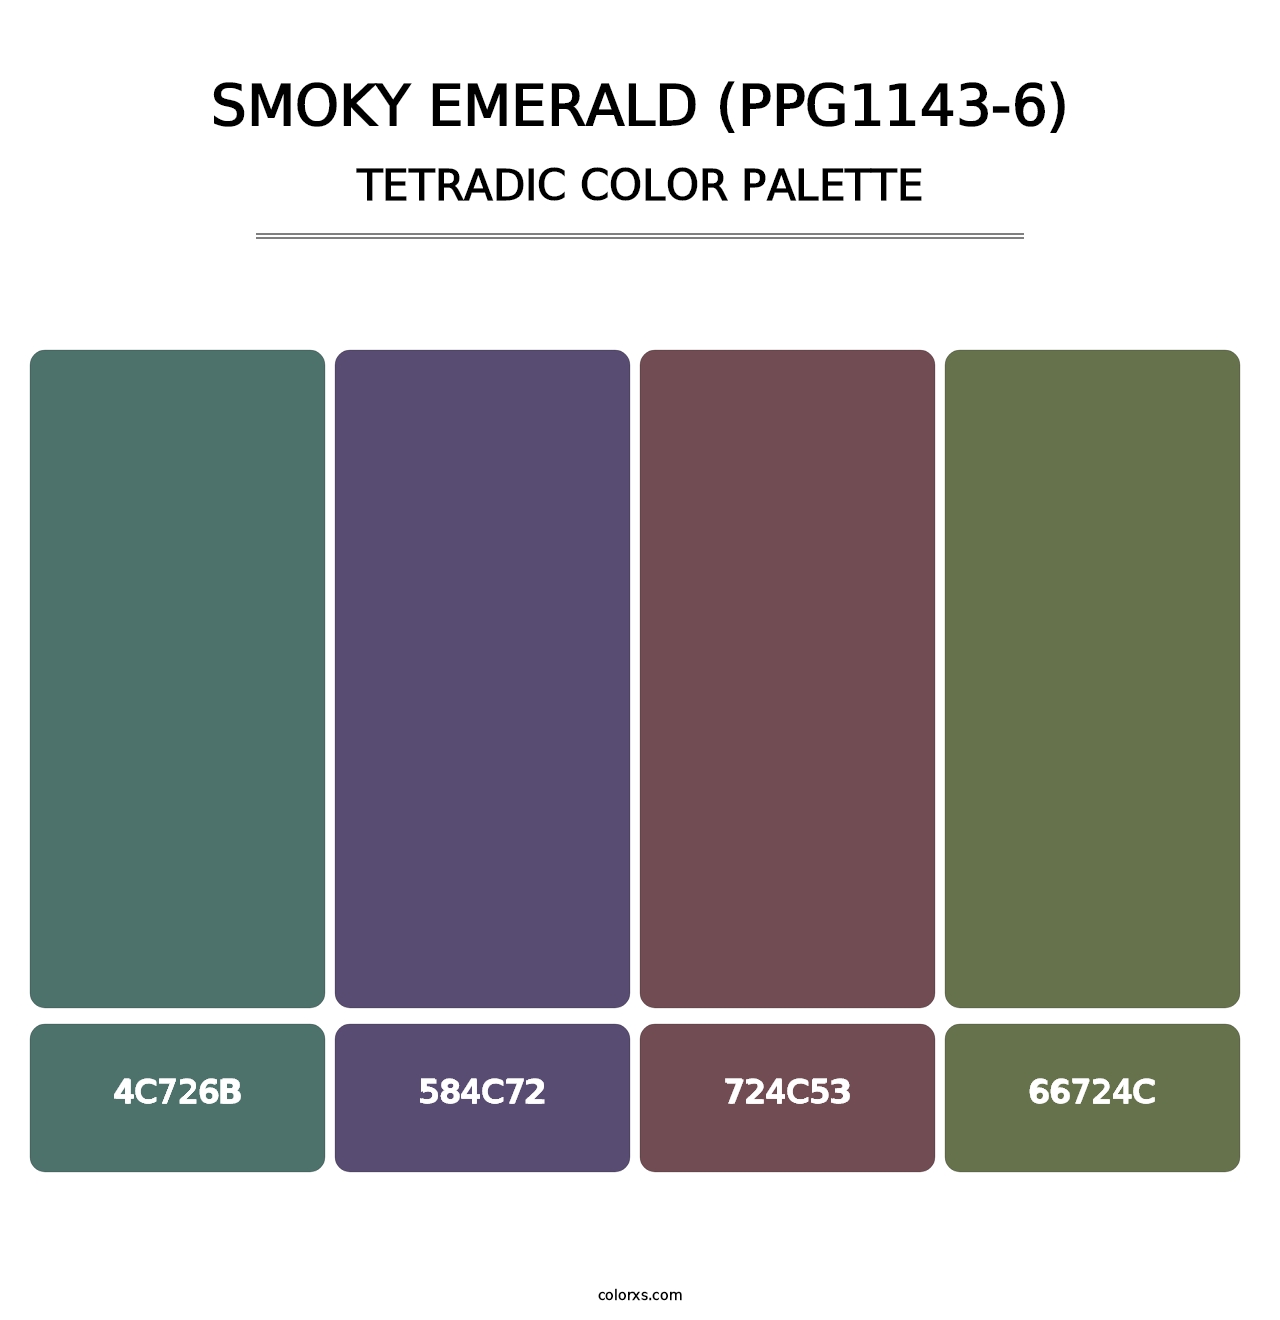 Smoky Emerald (PPG1143-6) - Tetradic Color Palette